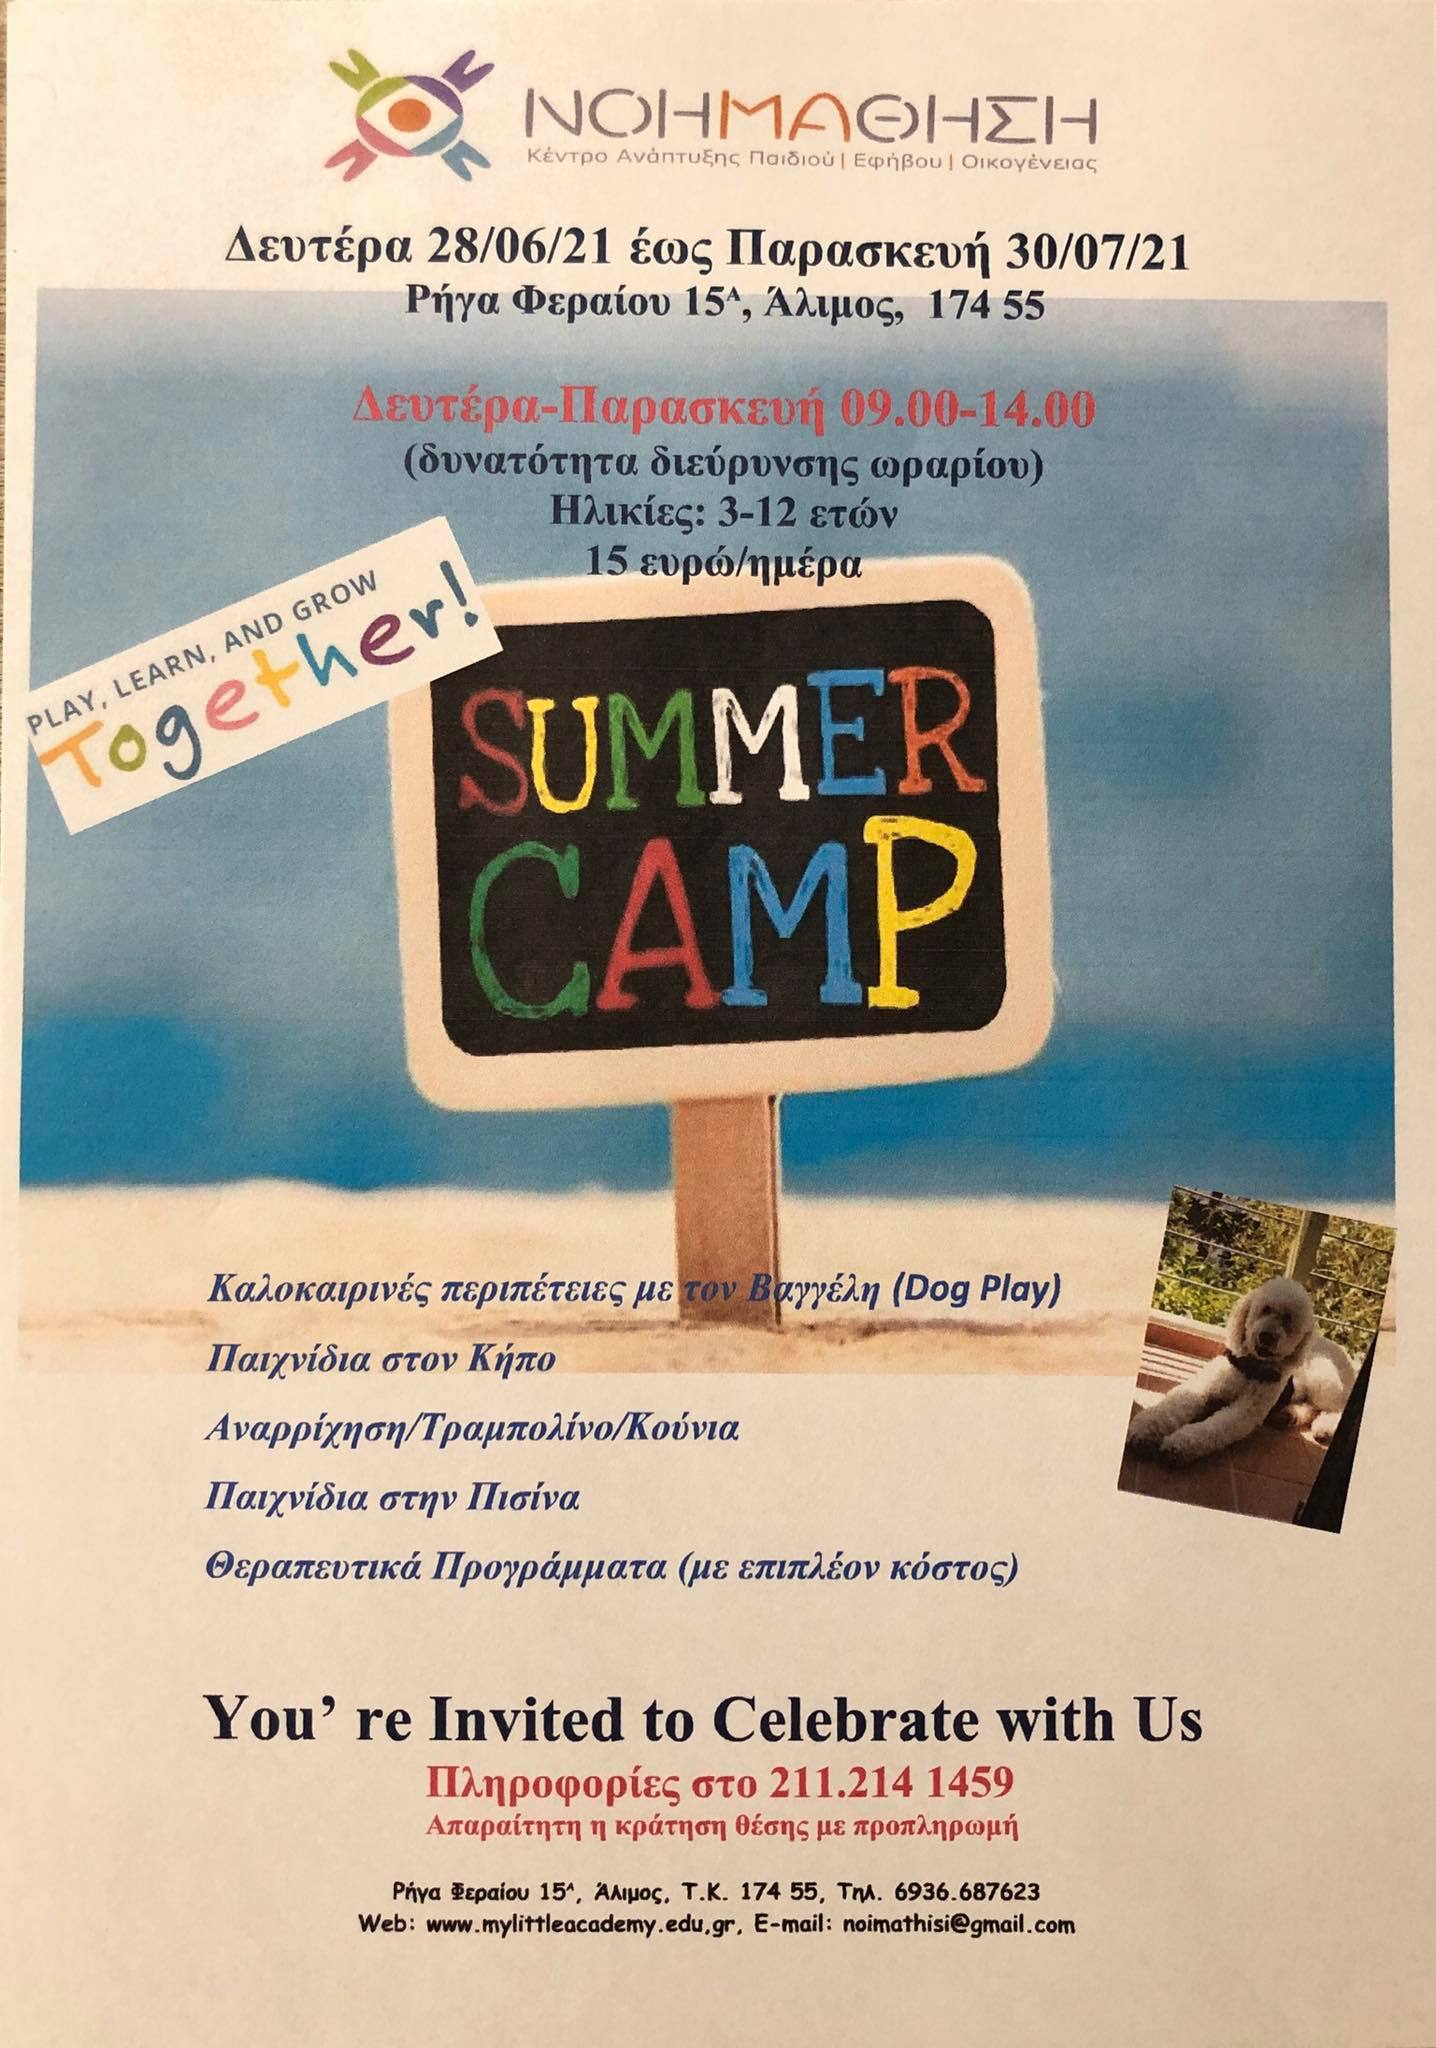 Summer Camp by Νοημάθηση logo